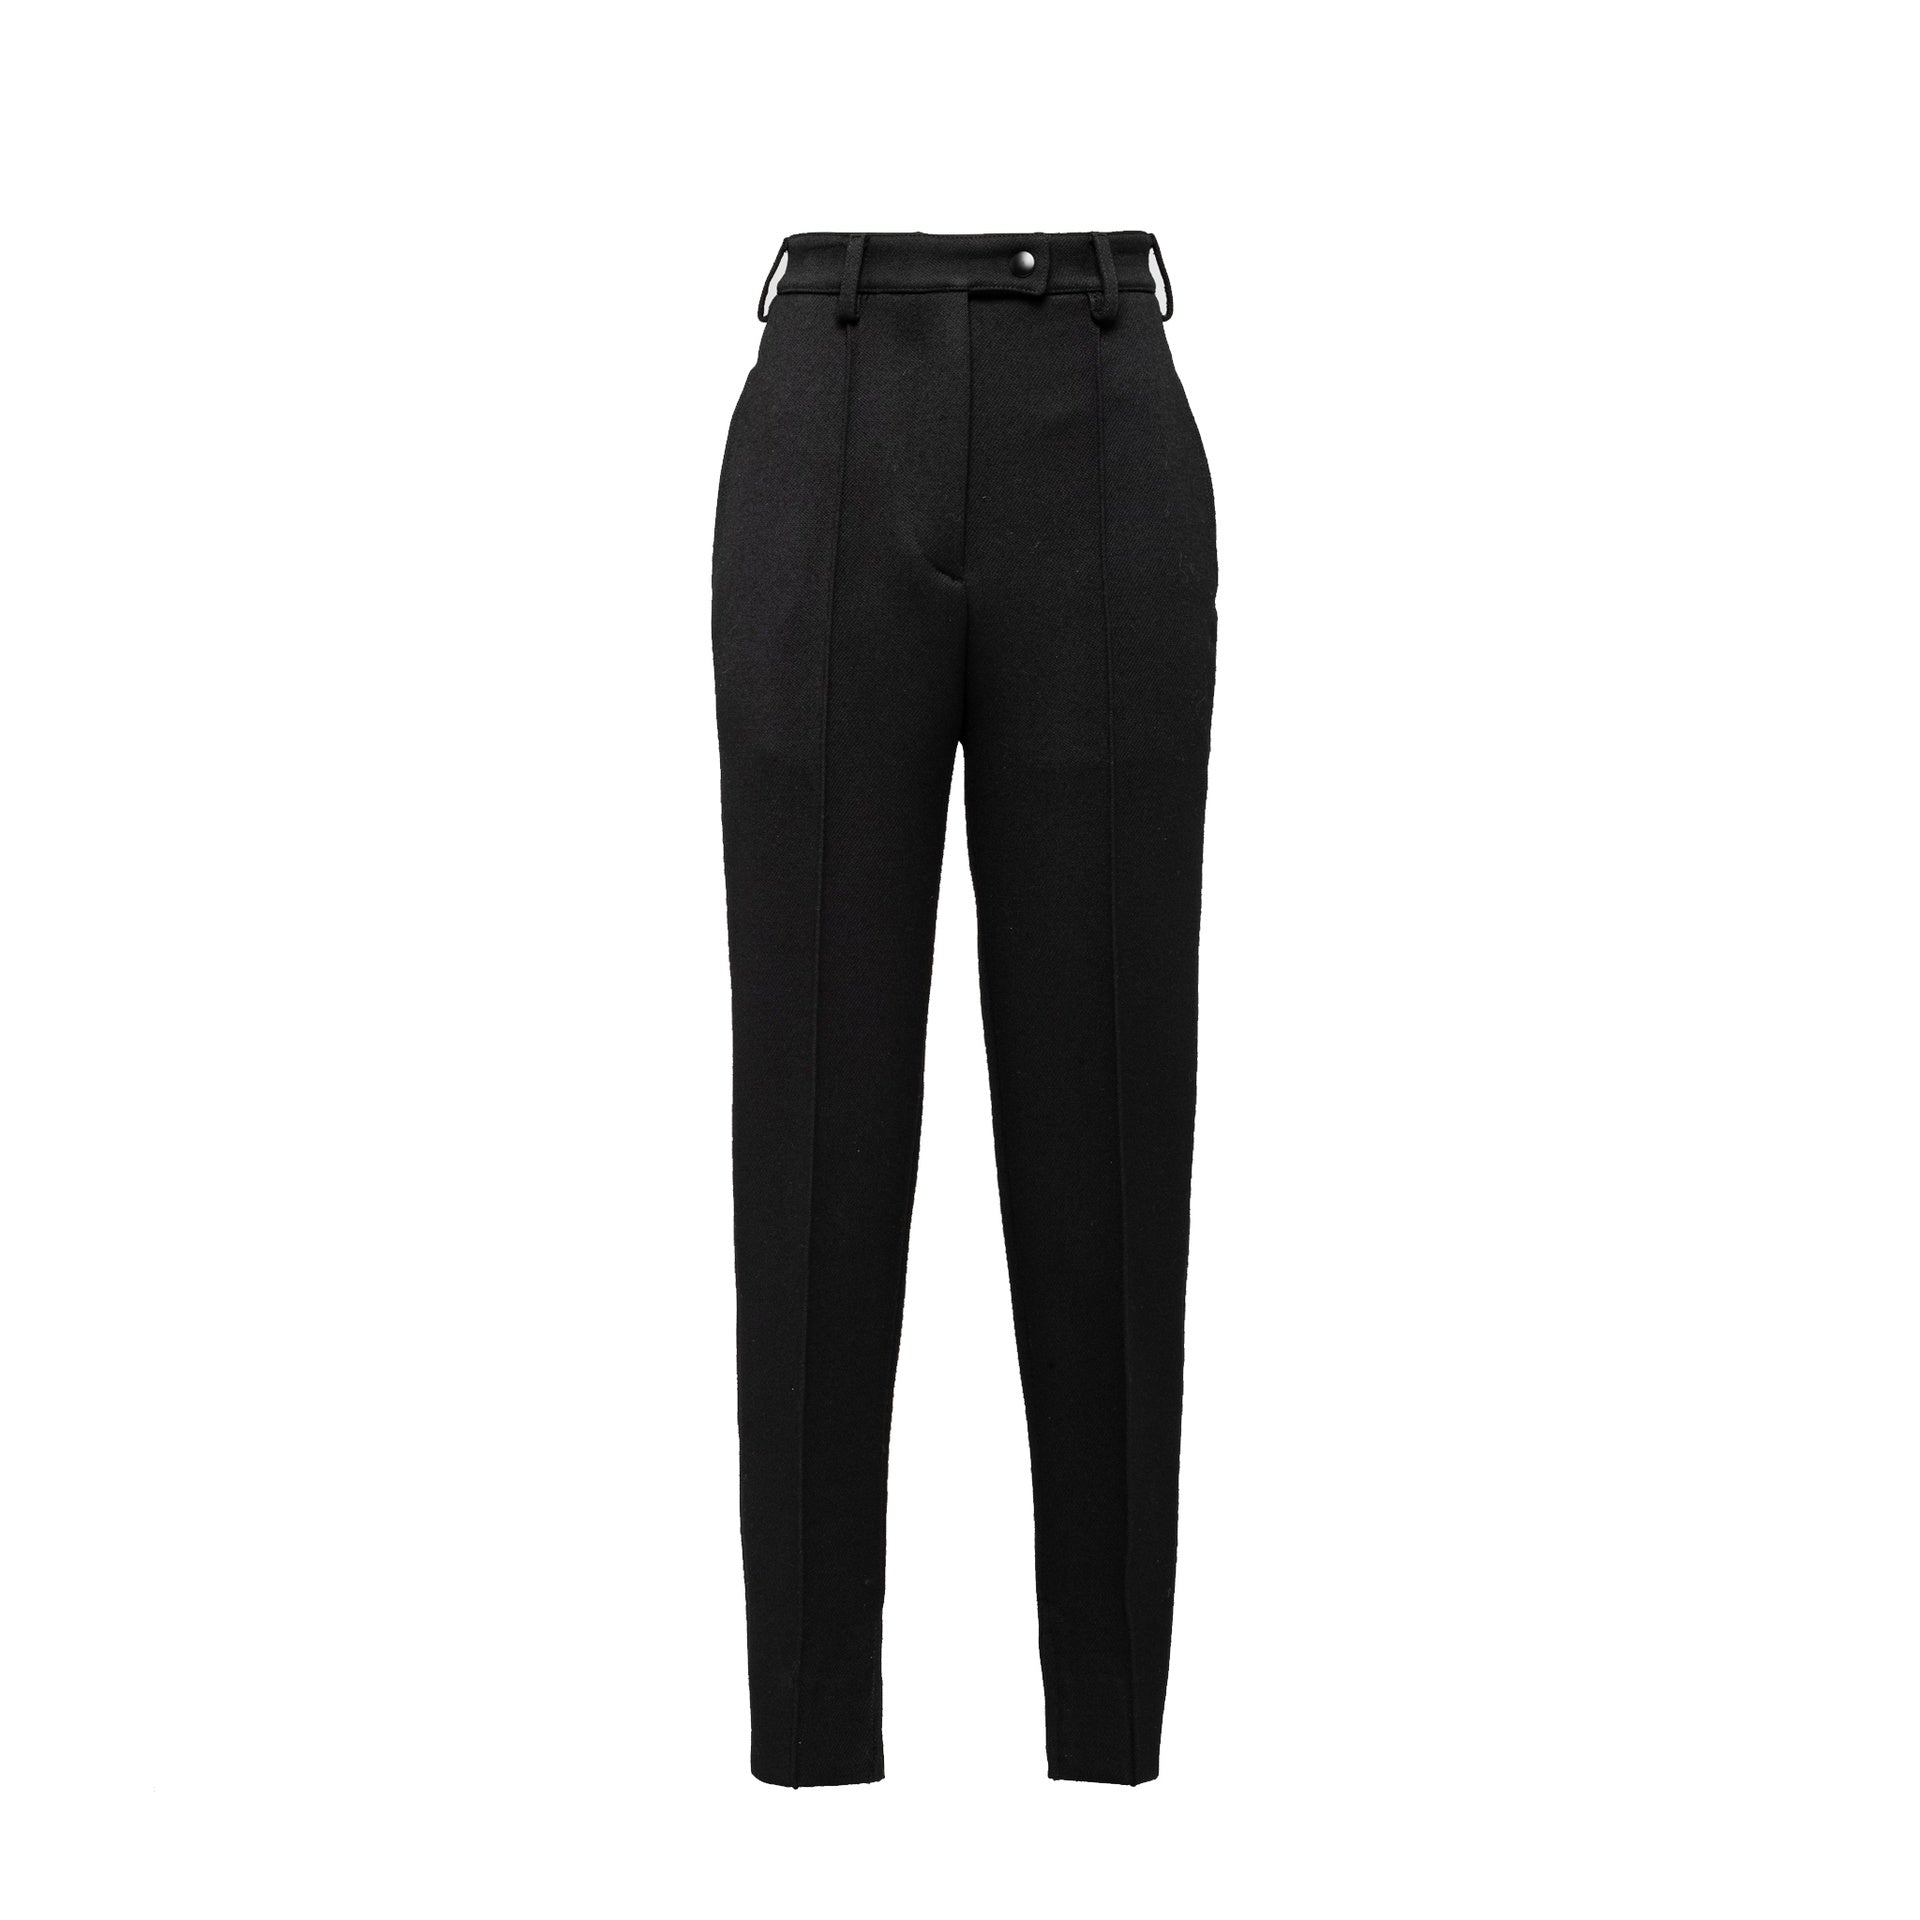 PRADA-Outlet-Sale-Prada Wool Pants-WOMEN CLOTHING-BLACK-40-ARCHIVIST